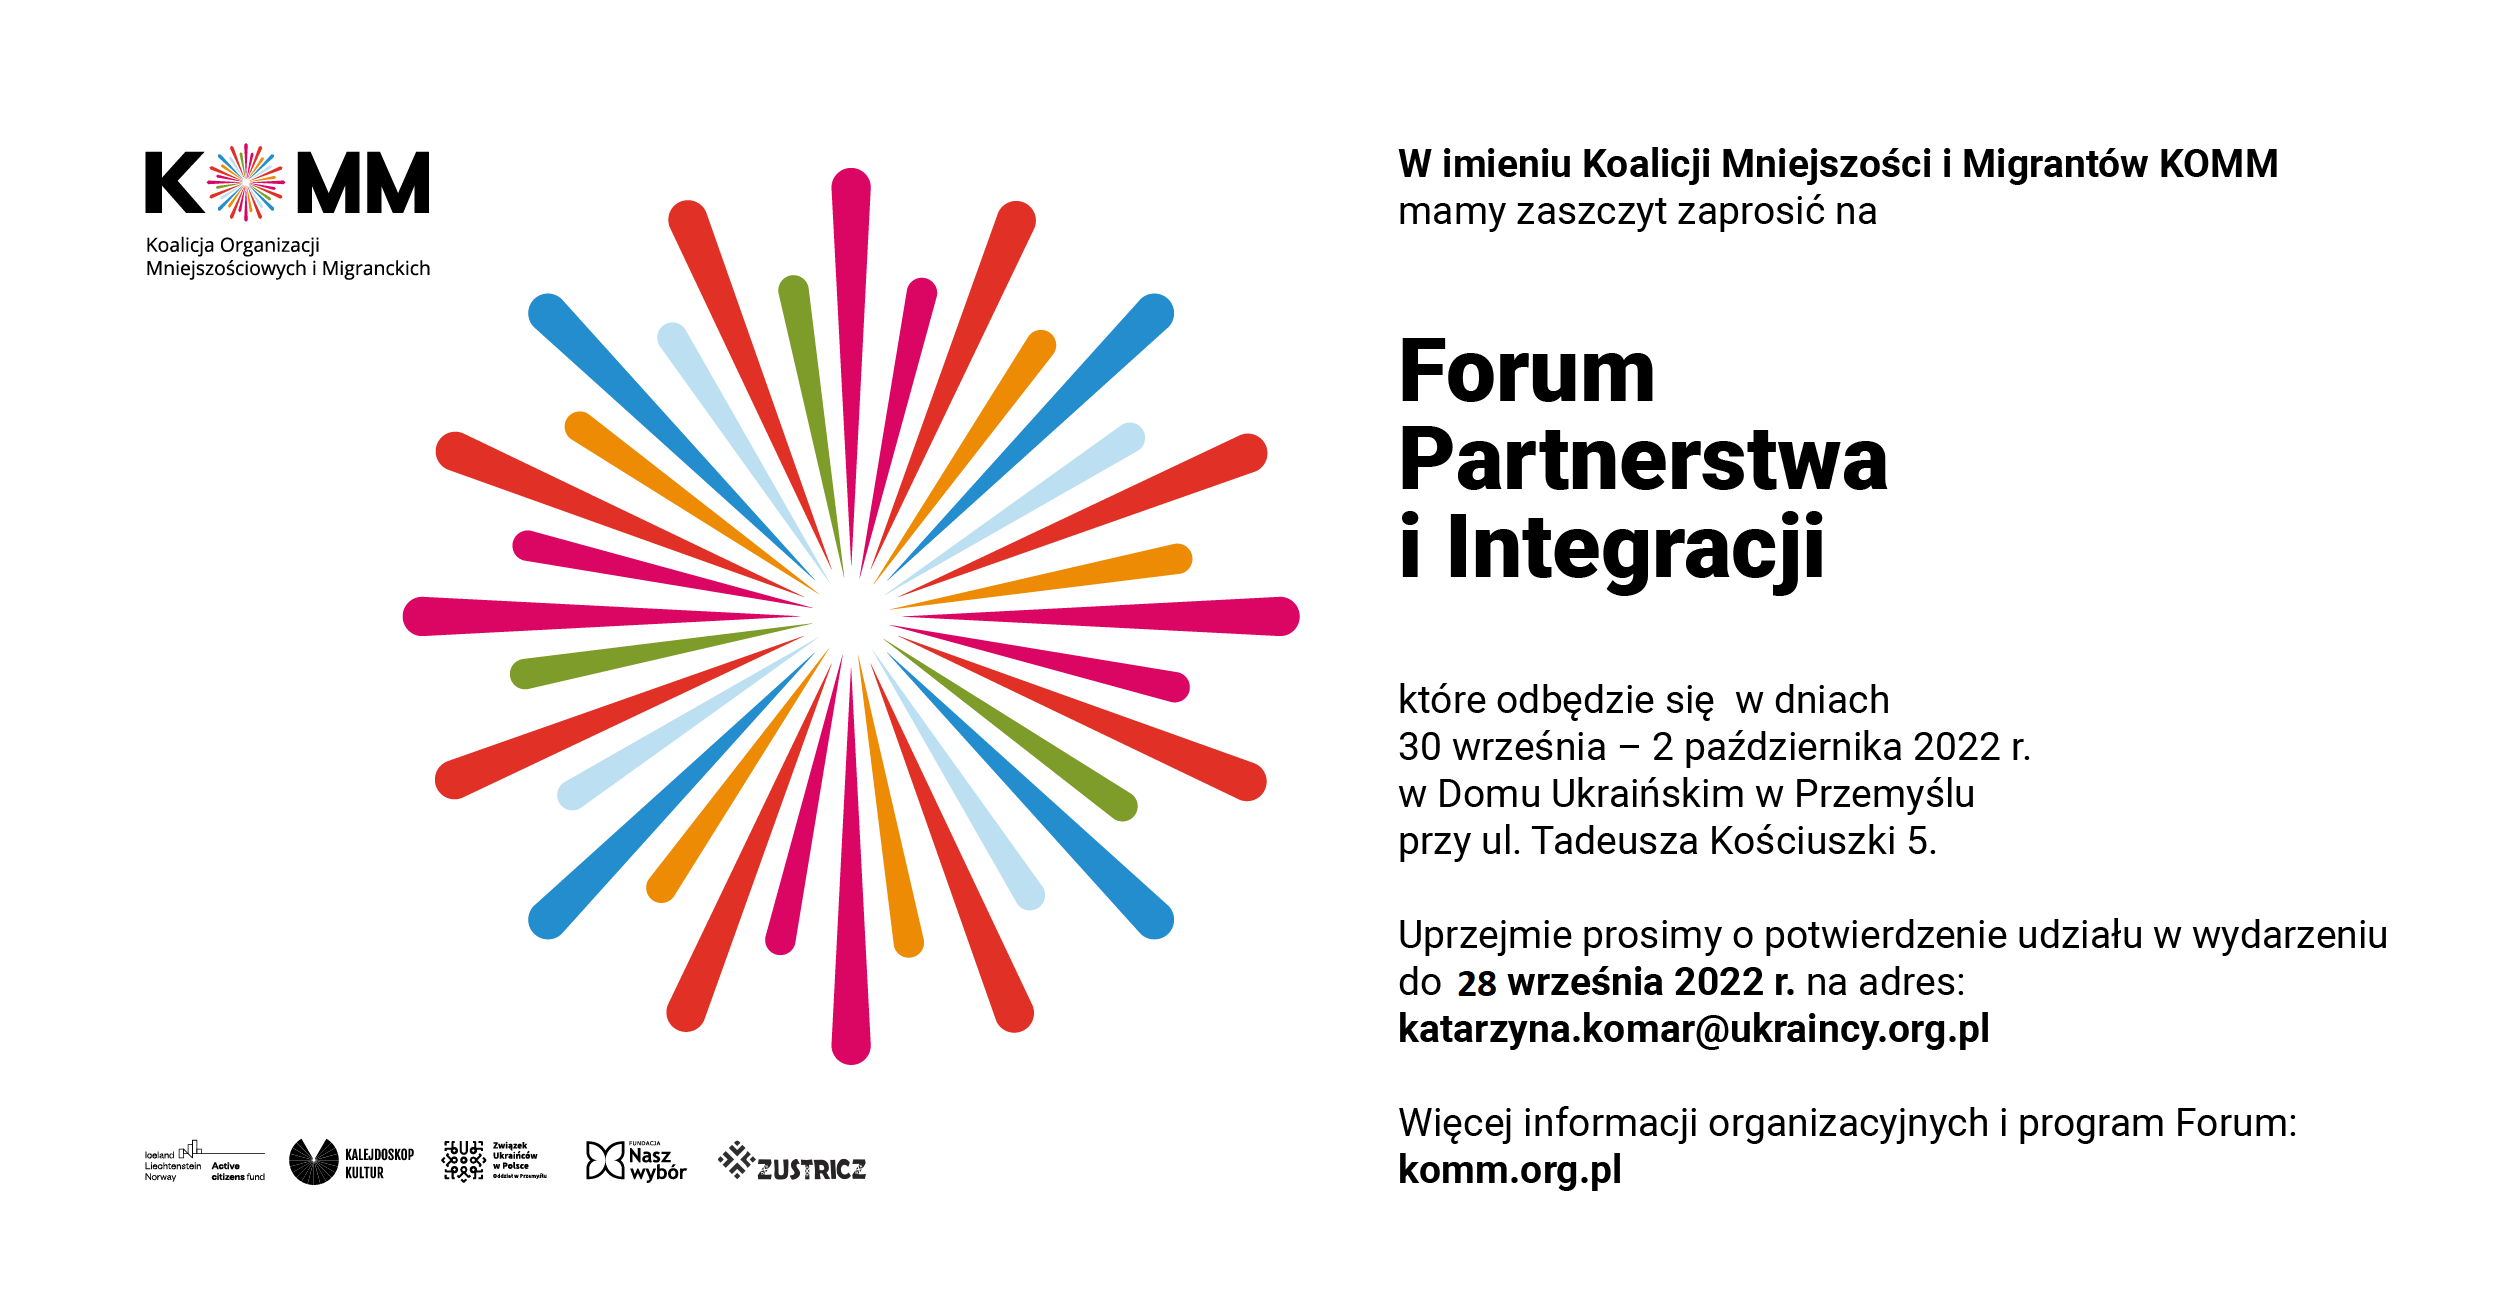 Forum Partnerstwa i Integracji